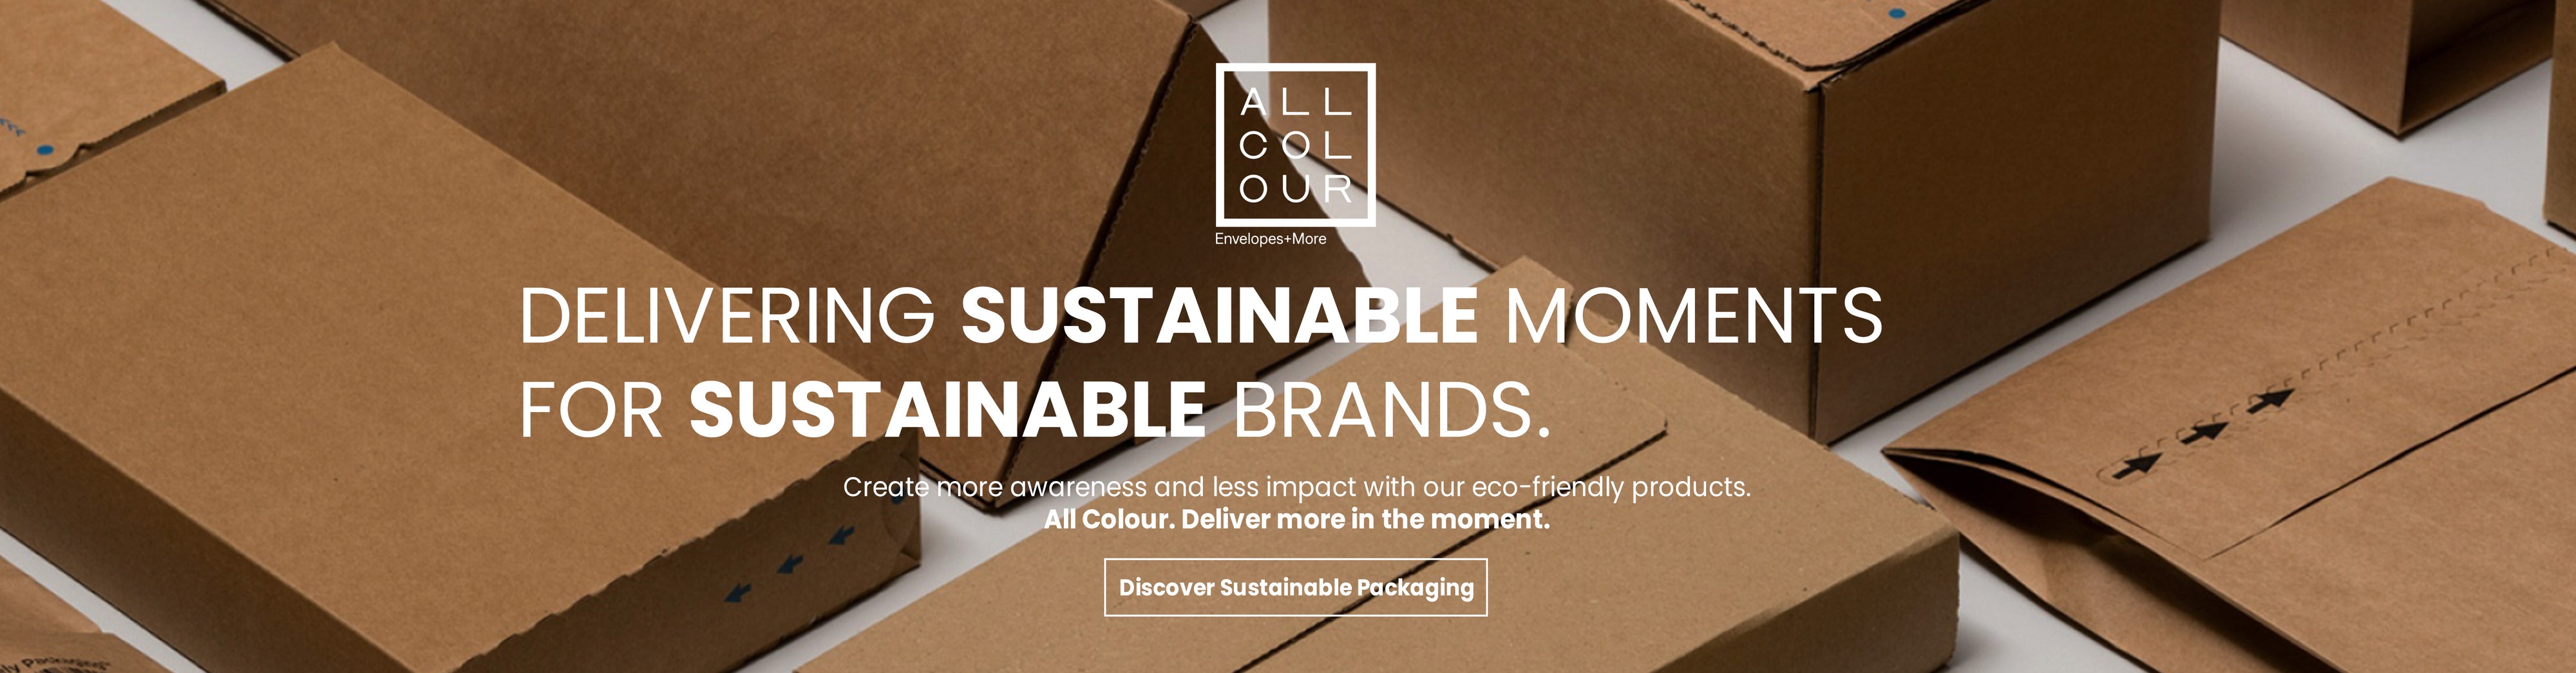 All Colour Envelopes | Envelopes & Packaging Supplier UK | All Colour ...